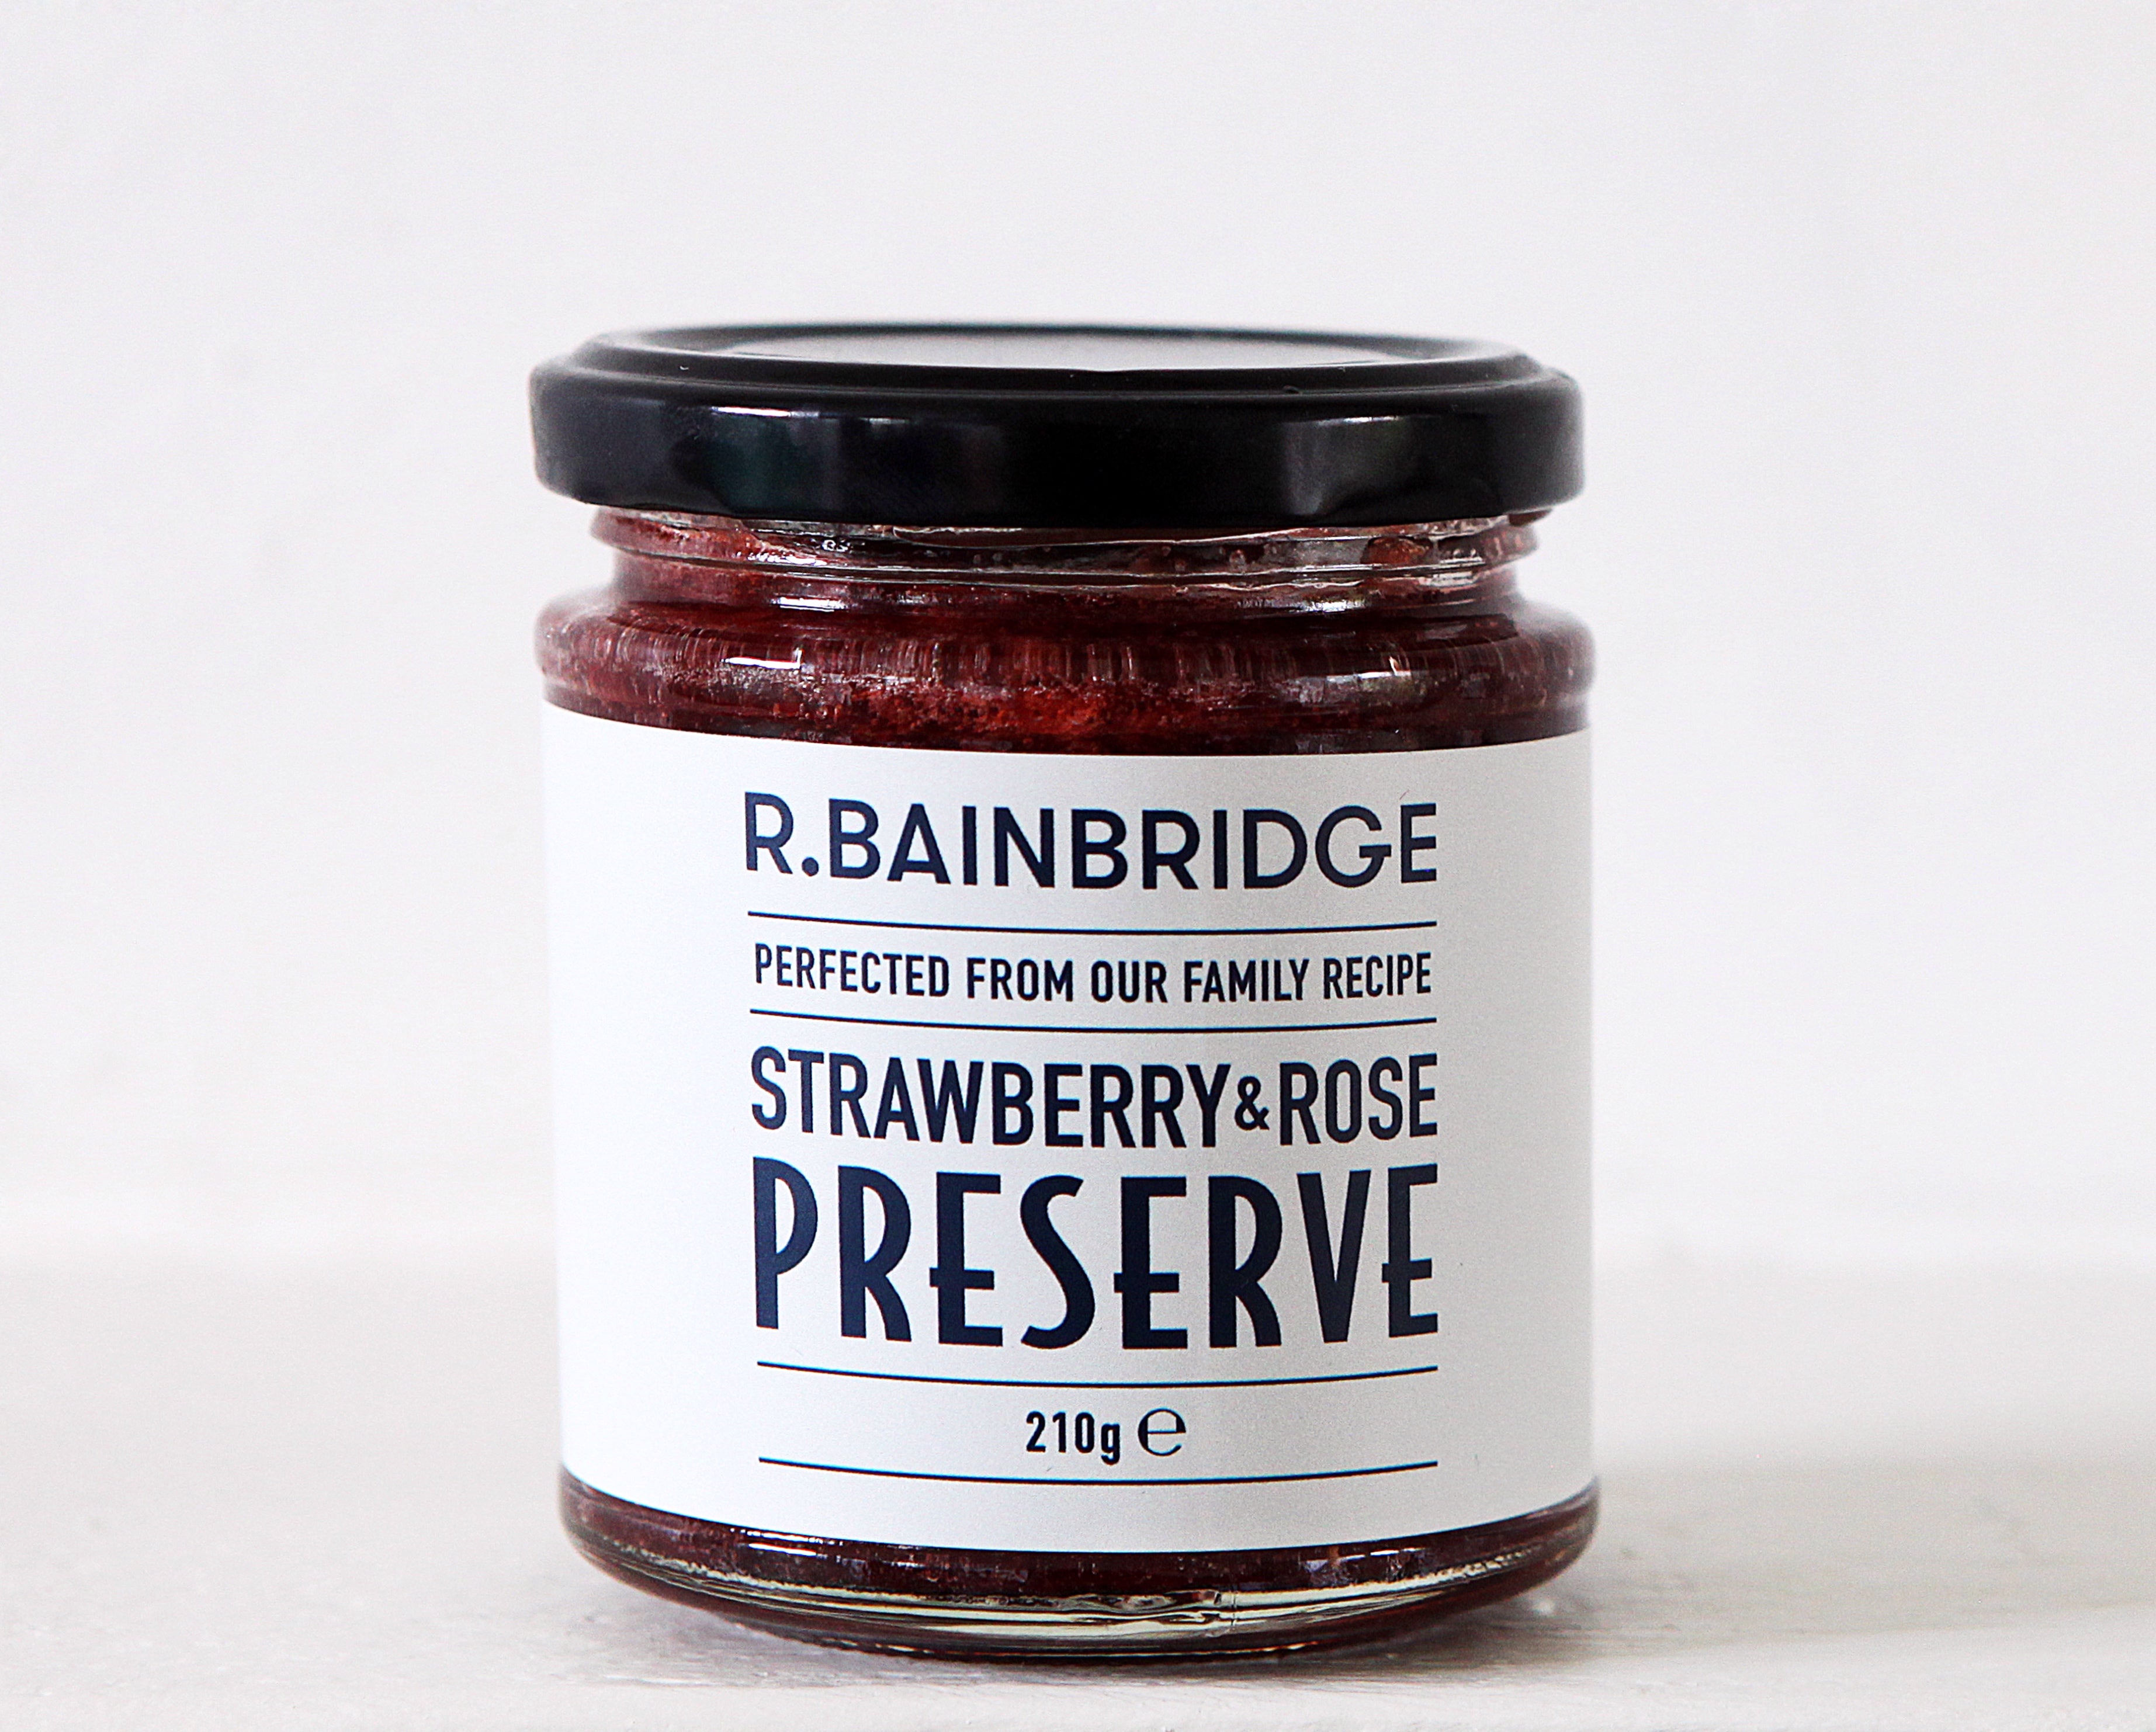 Strawberry & Rose Preserve - 210g